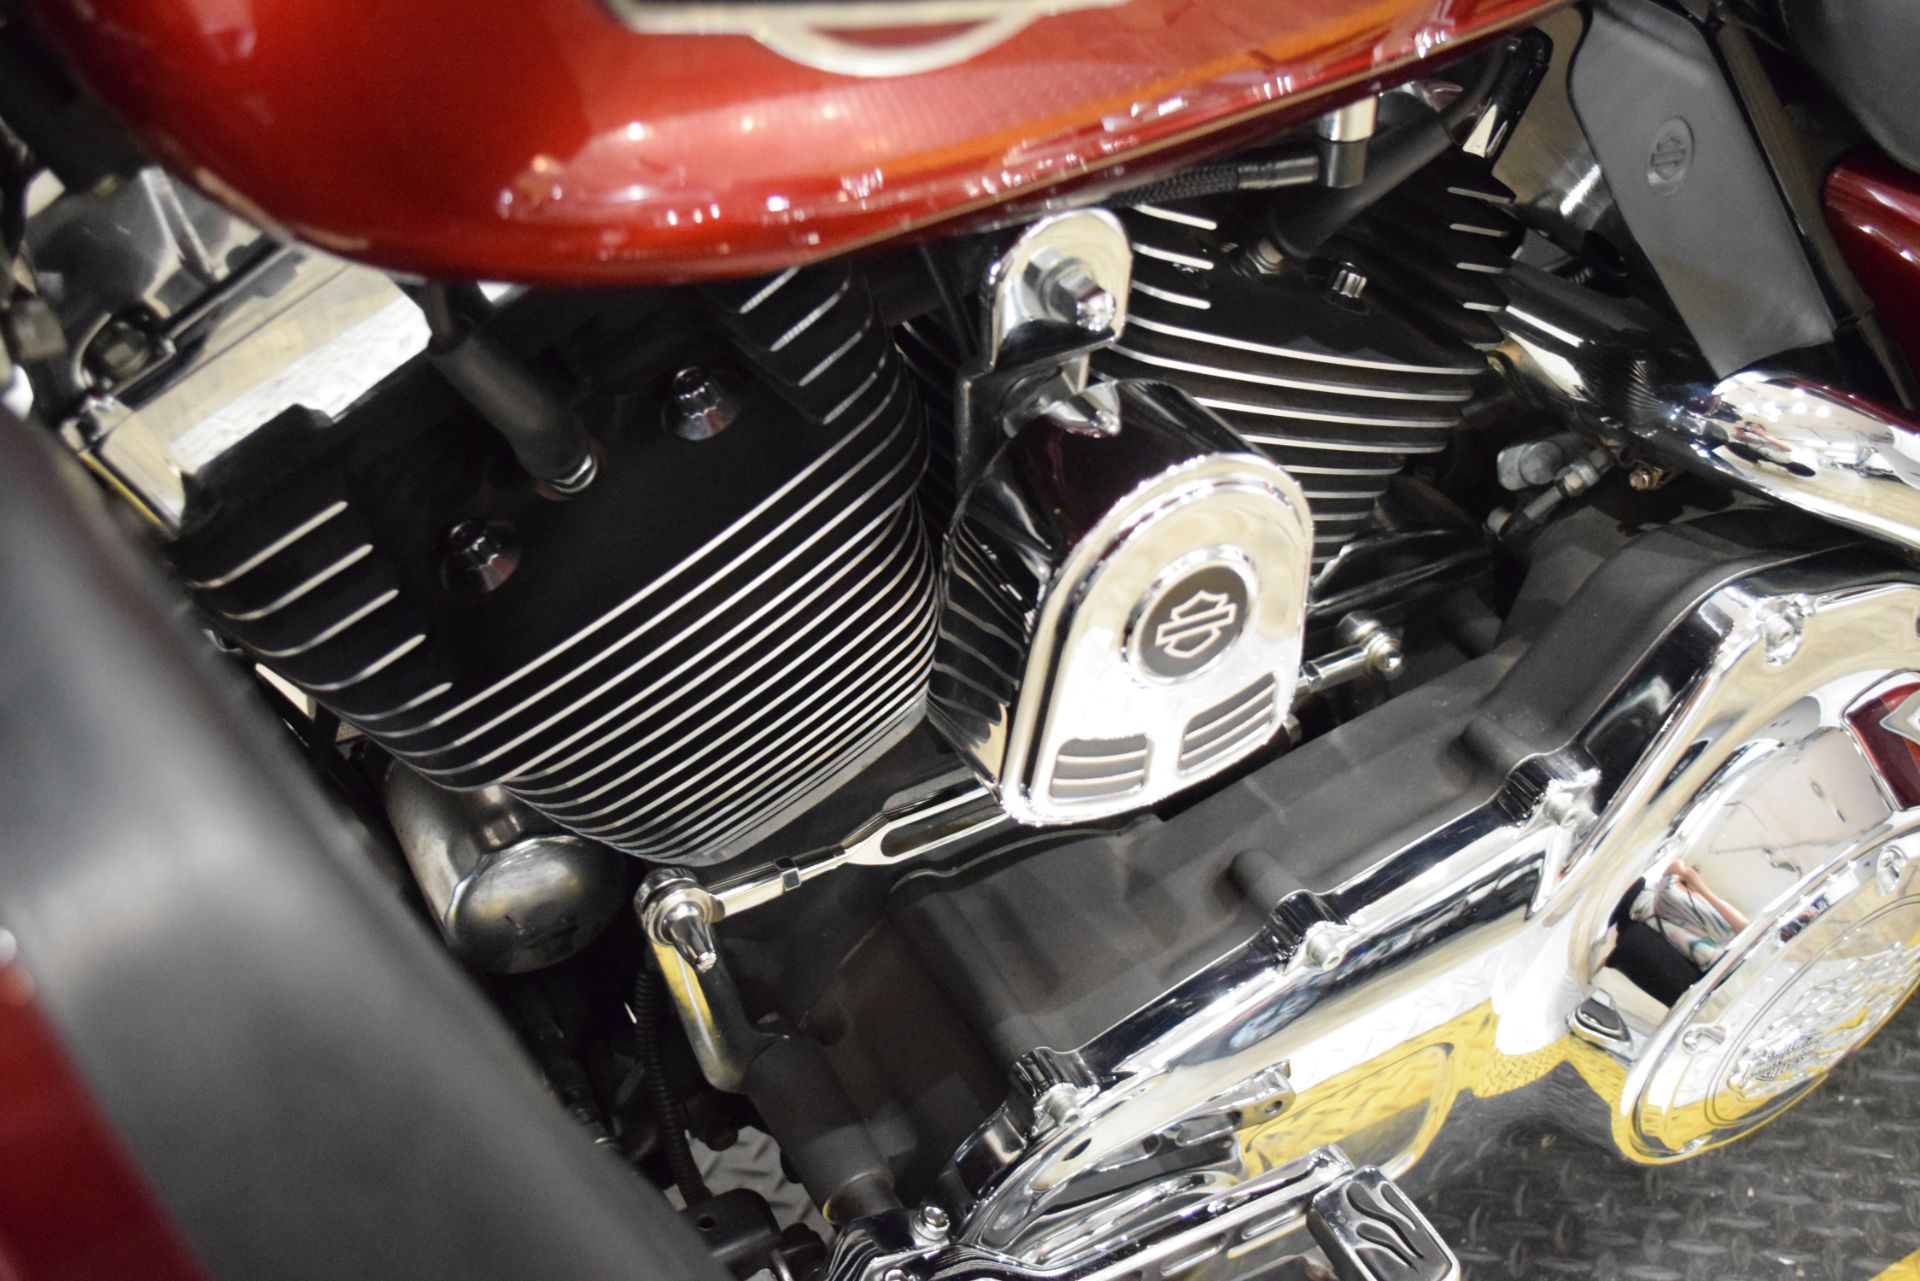 2008 Harley-Davidson Ultra Classic® Electra Glide® in Wauconda, Illinois - Photo 19